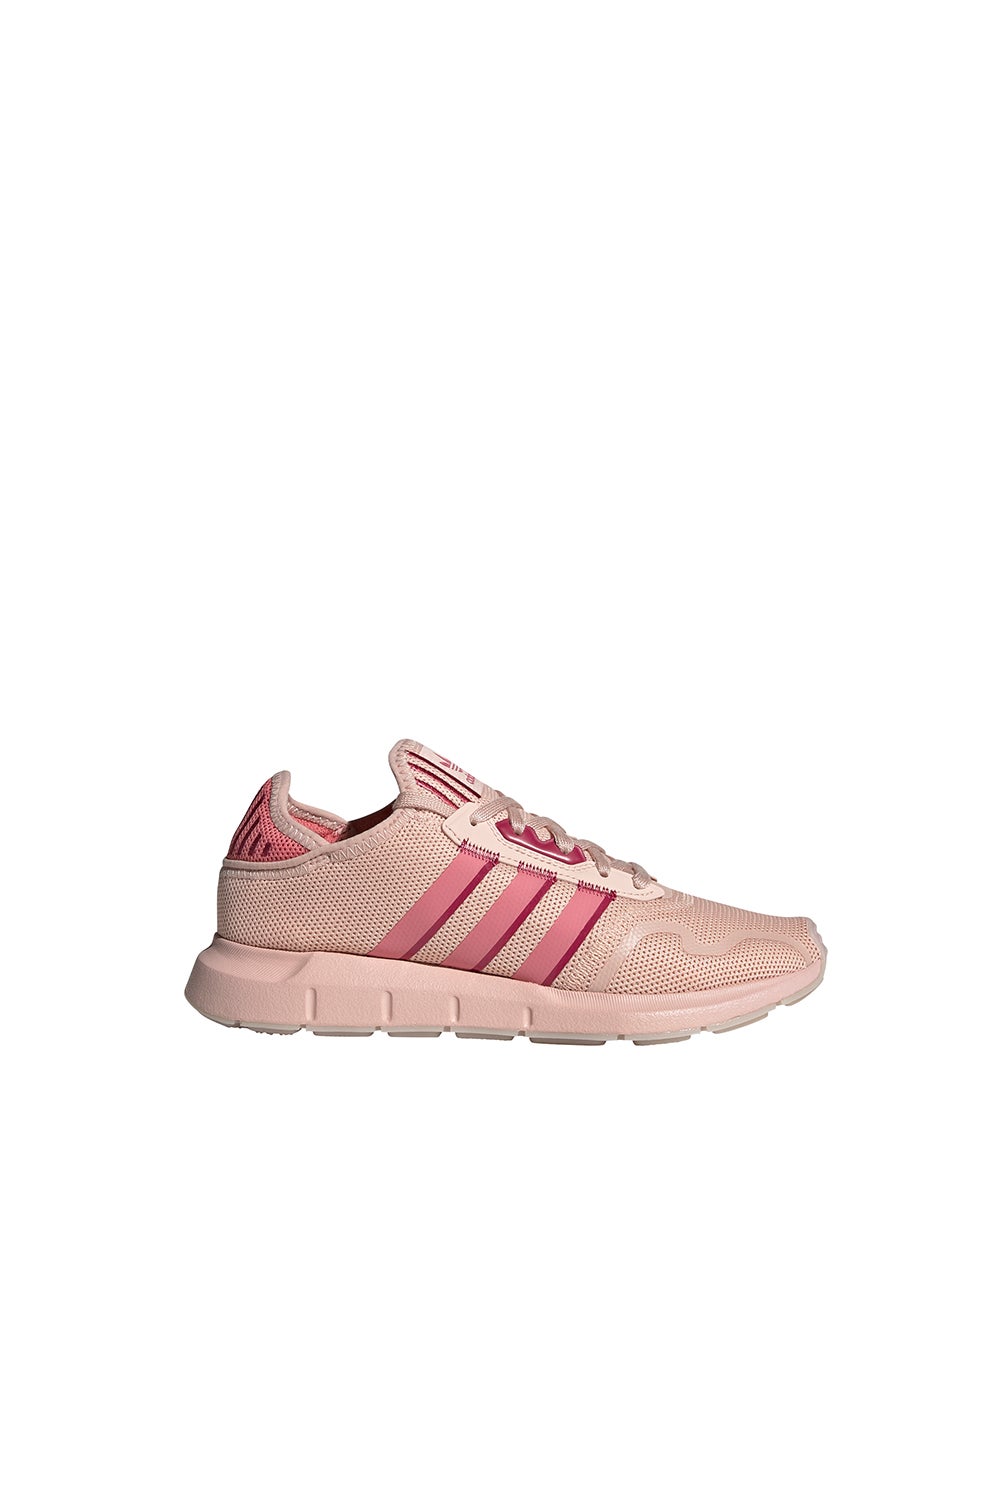 adidas Swift Run X Vapour Pink/Hazy Rose/Wild Pink